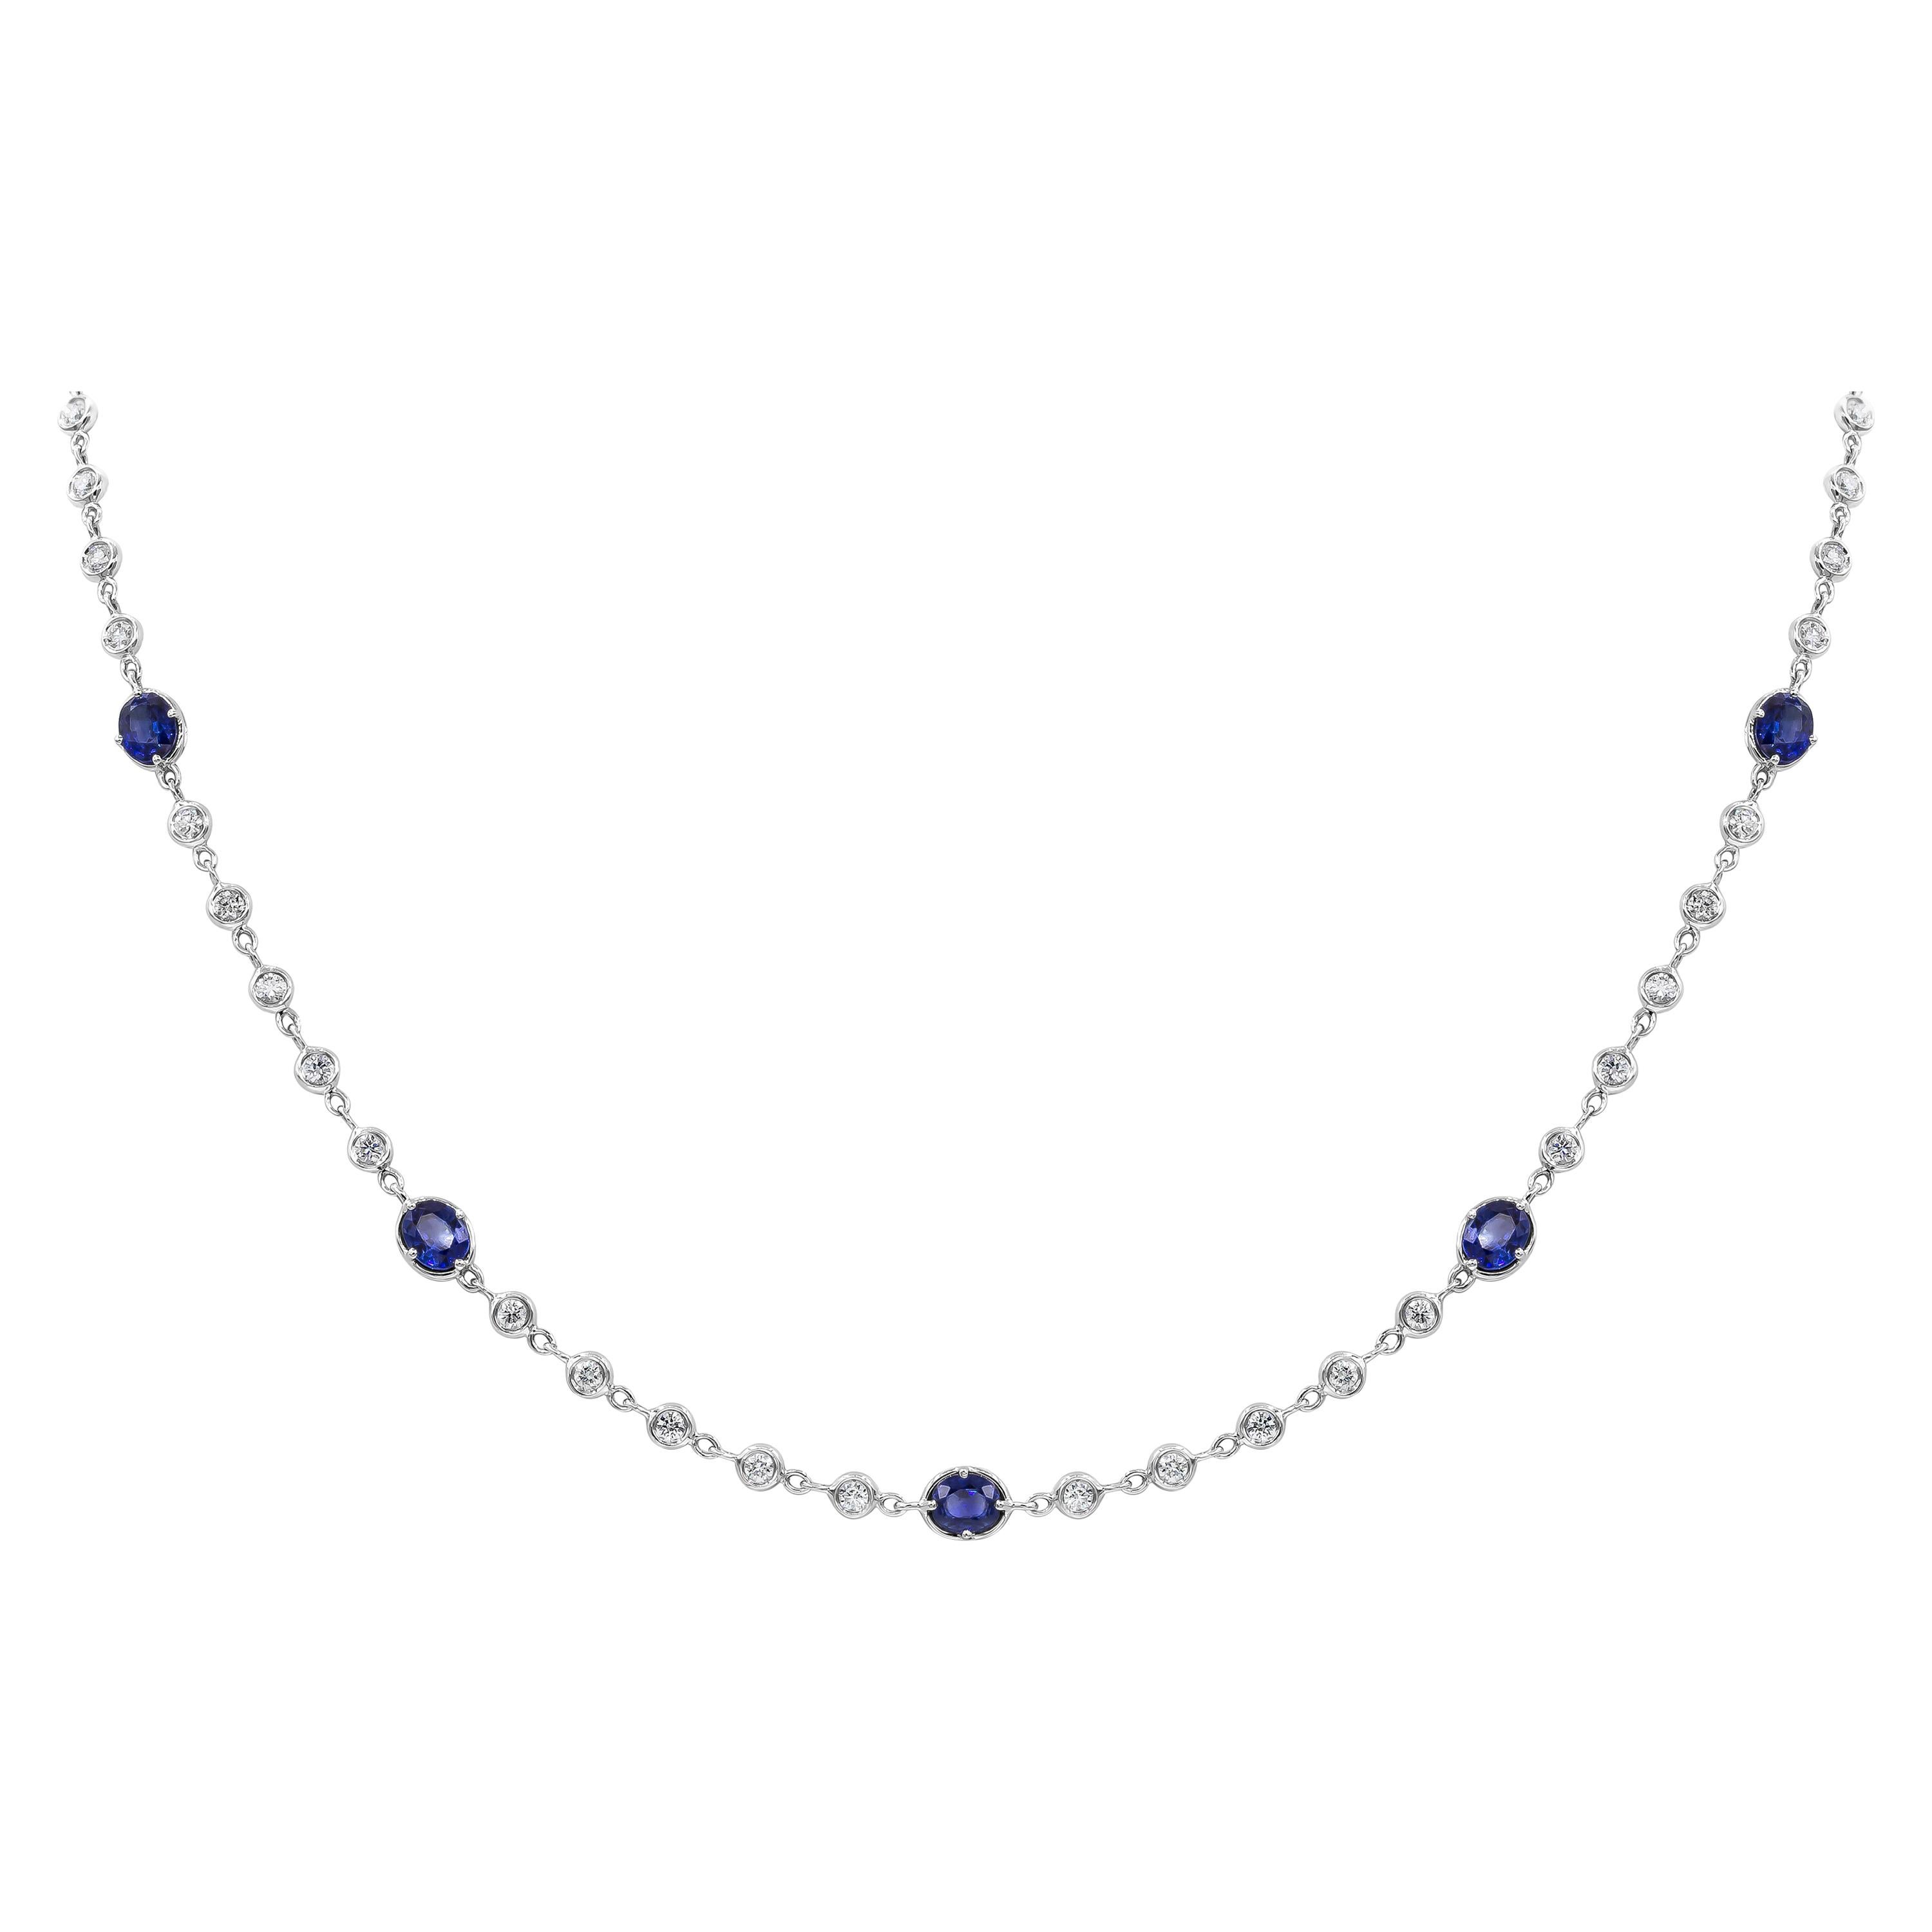 Roman Malakov 4.00 Carats Total Blue Sapphire Diamond by Yard Necklace